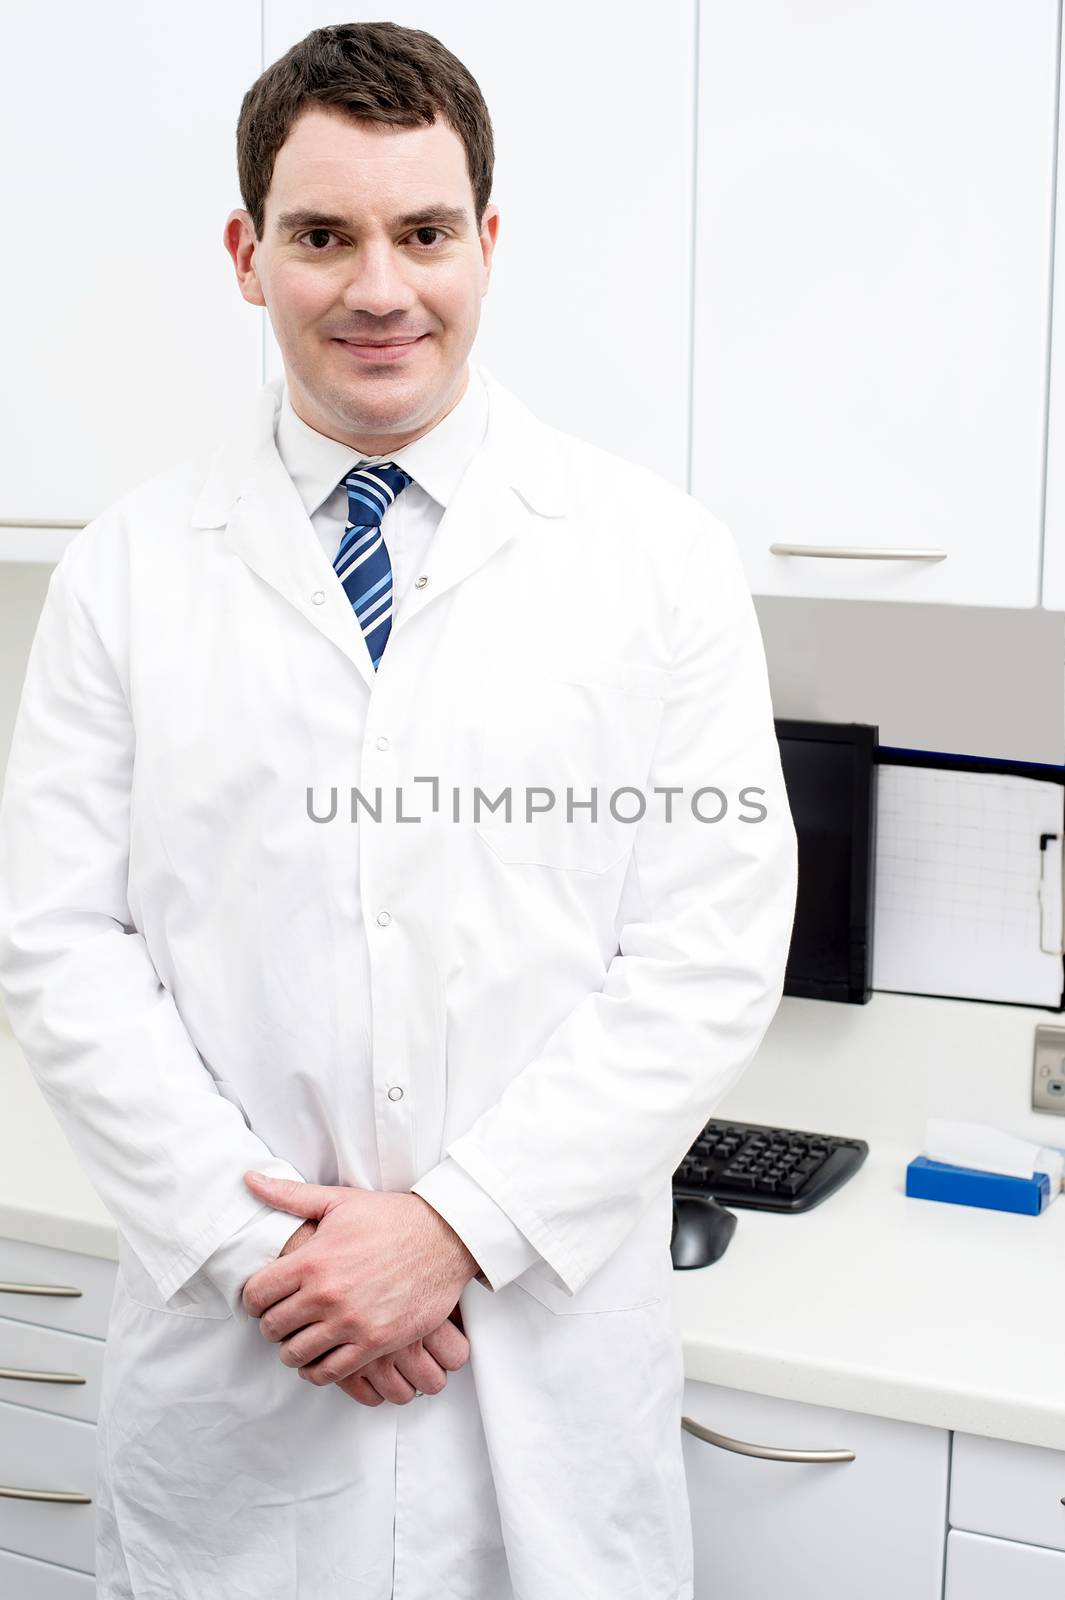 Happy male dentist posing at dental clinic